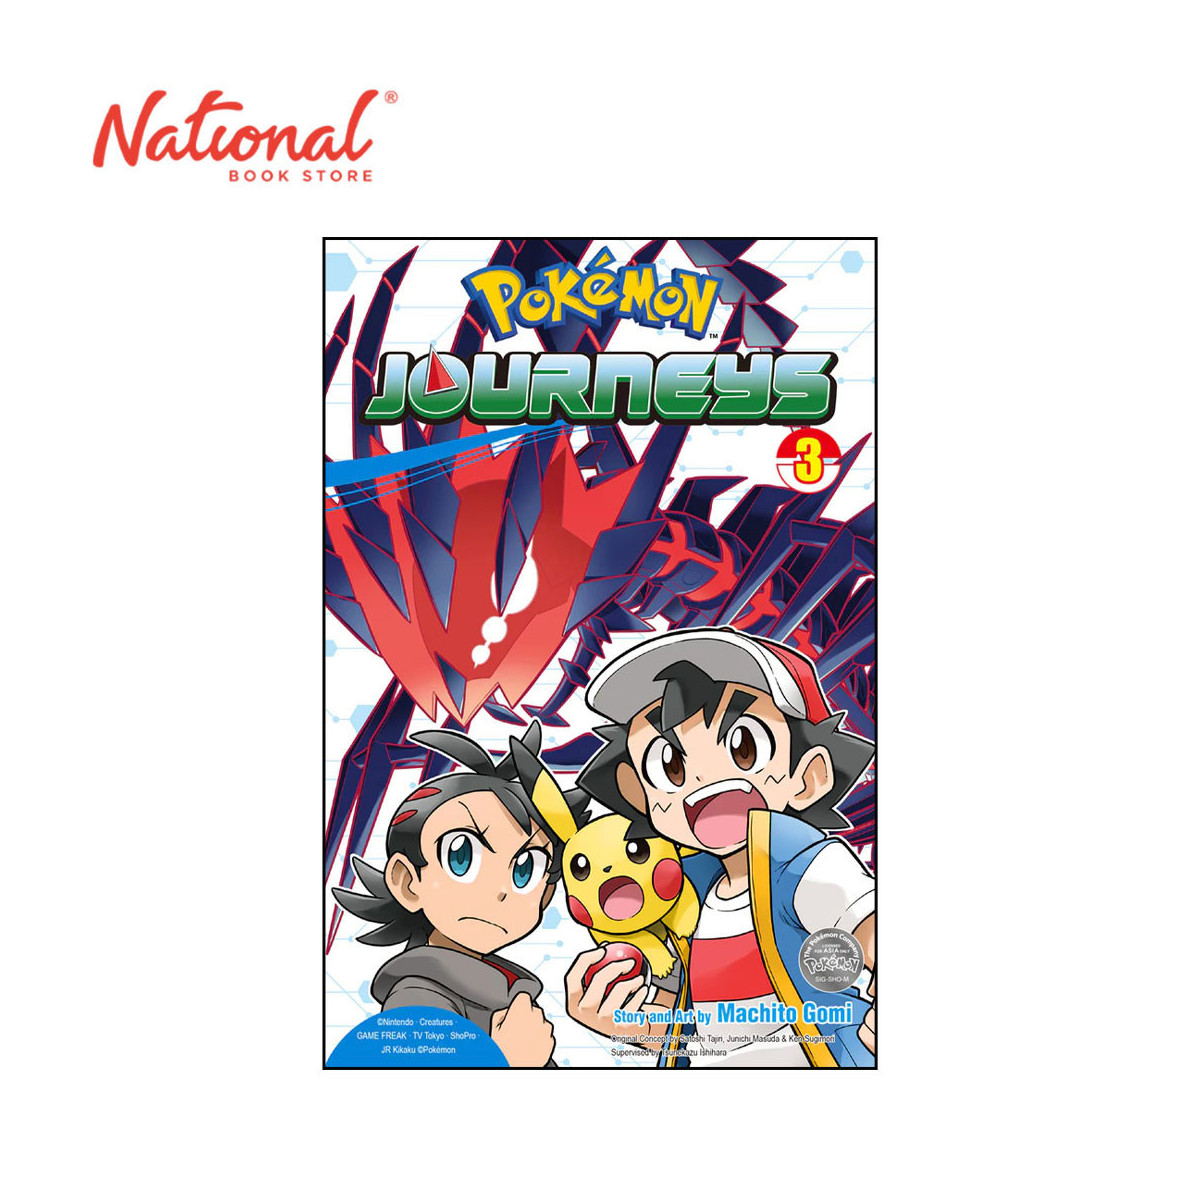 Pokemon Journeys No.3 by Machito Gomi - Trade Paperback - Books for Kids - Manga